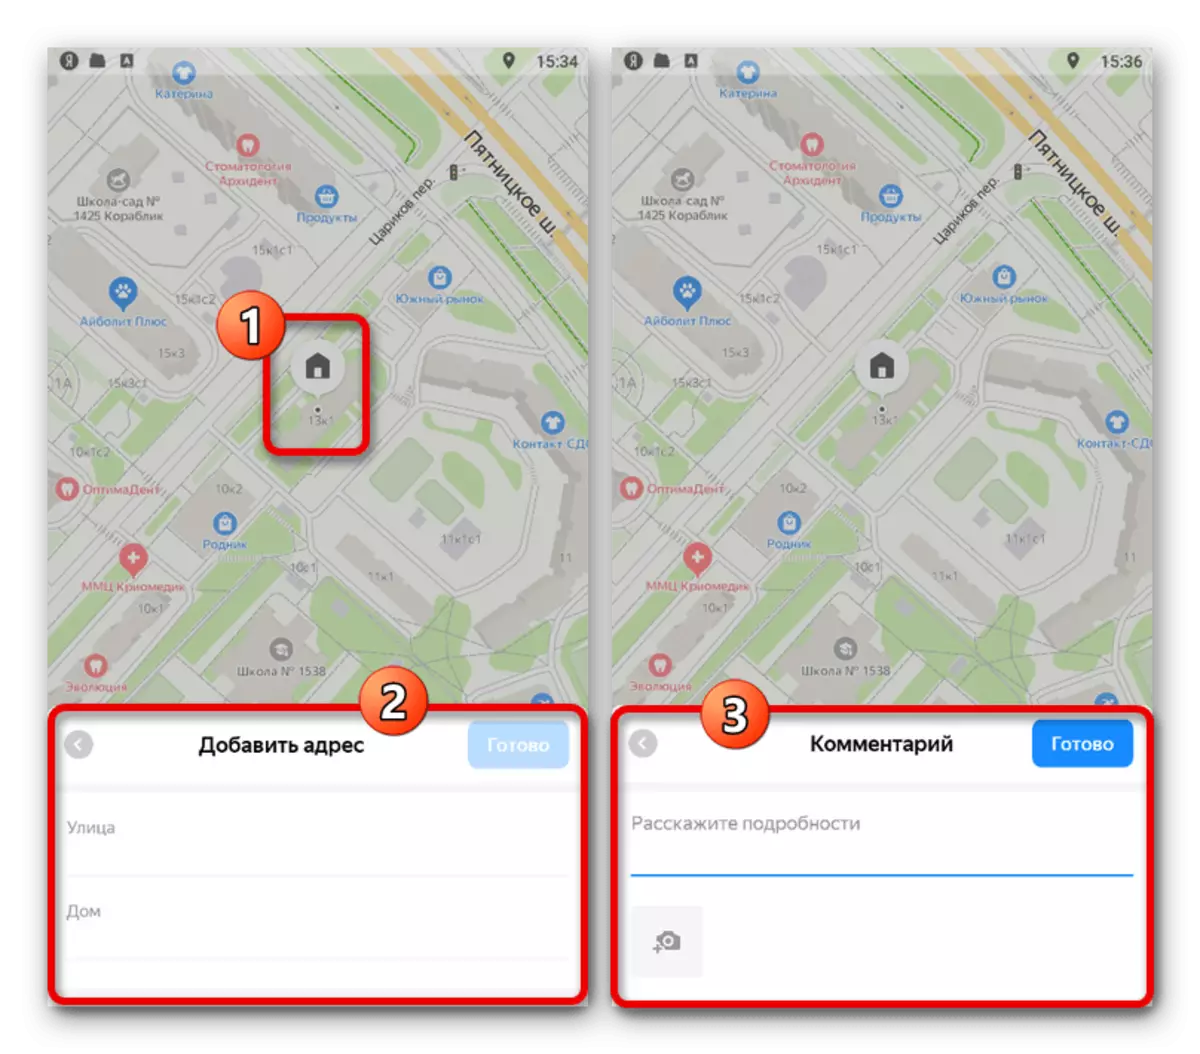 Yandex.maps એપ્લિકેશનમાં ઑબ્જેક્ટ વિશેની વિગતો ઉમેરી રહ્યા છે